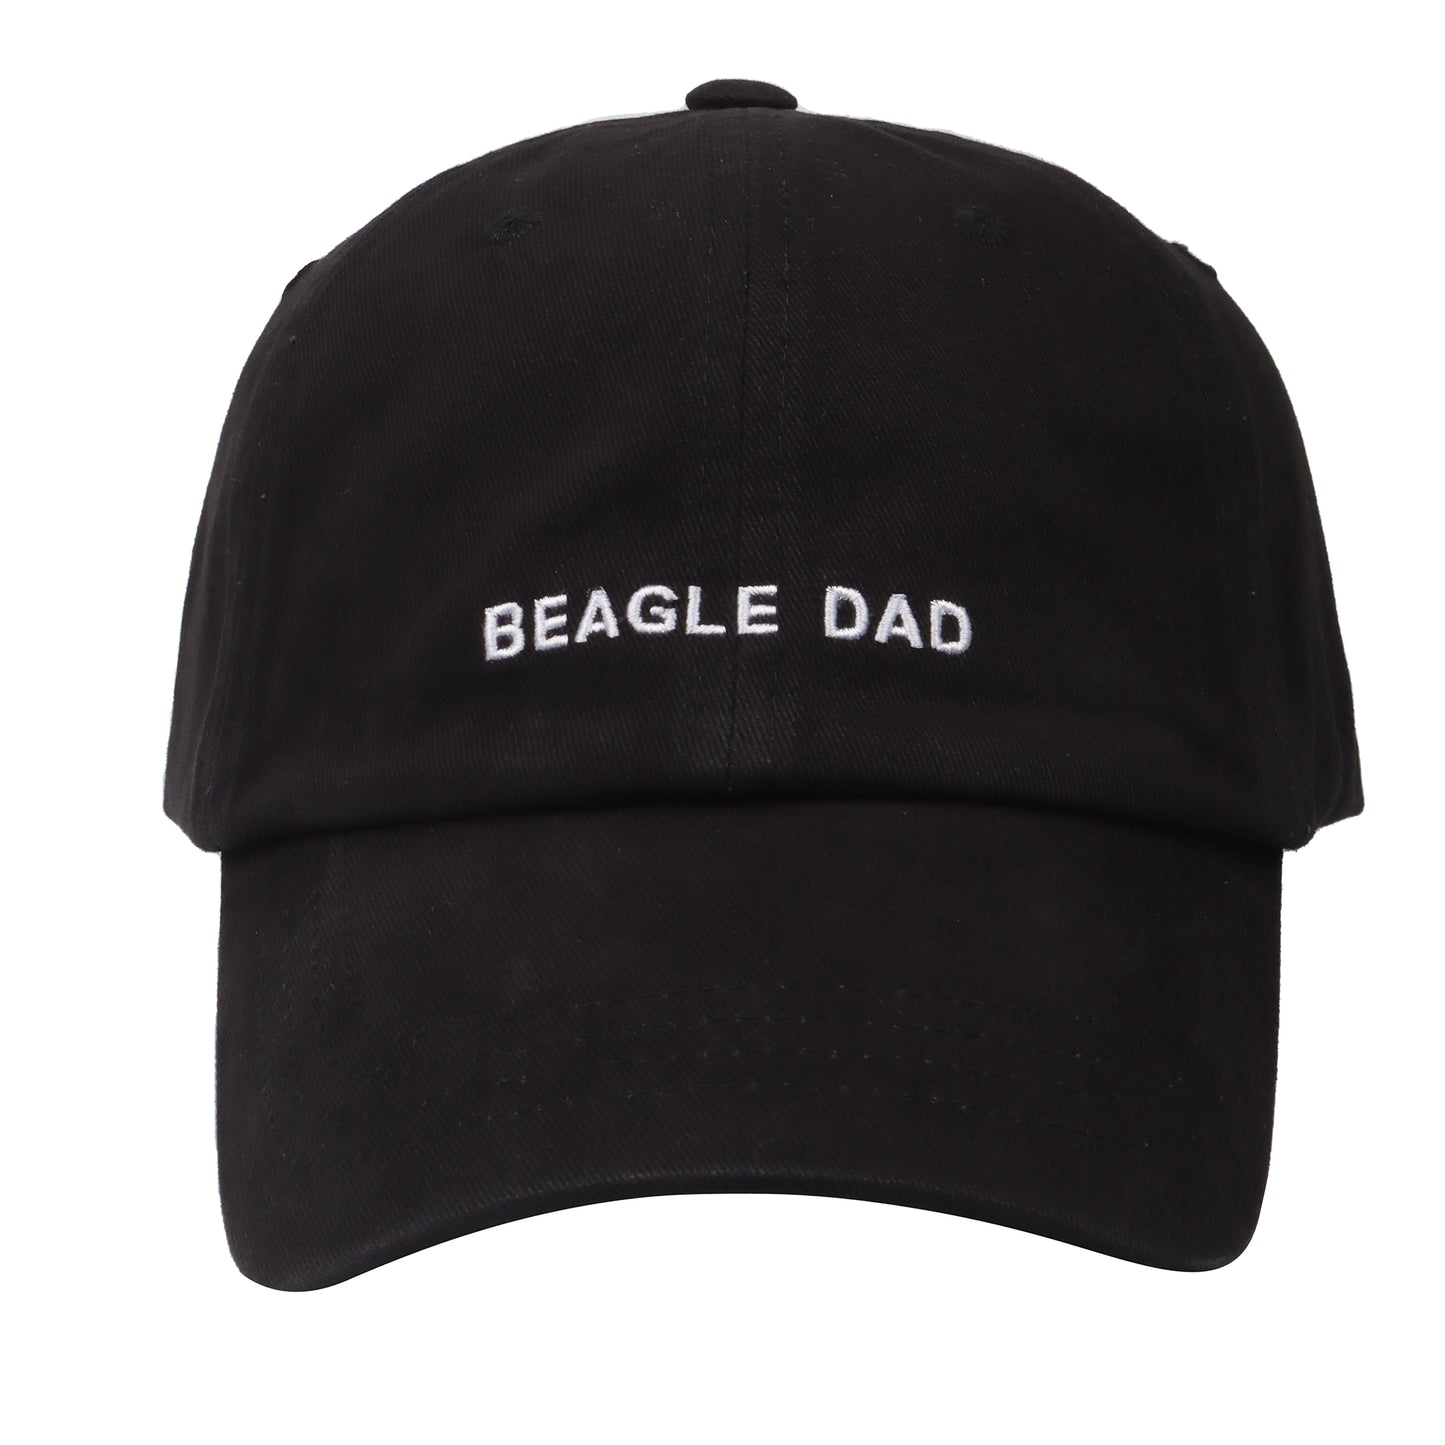 Beagle Dad Baseball Cap